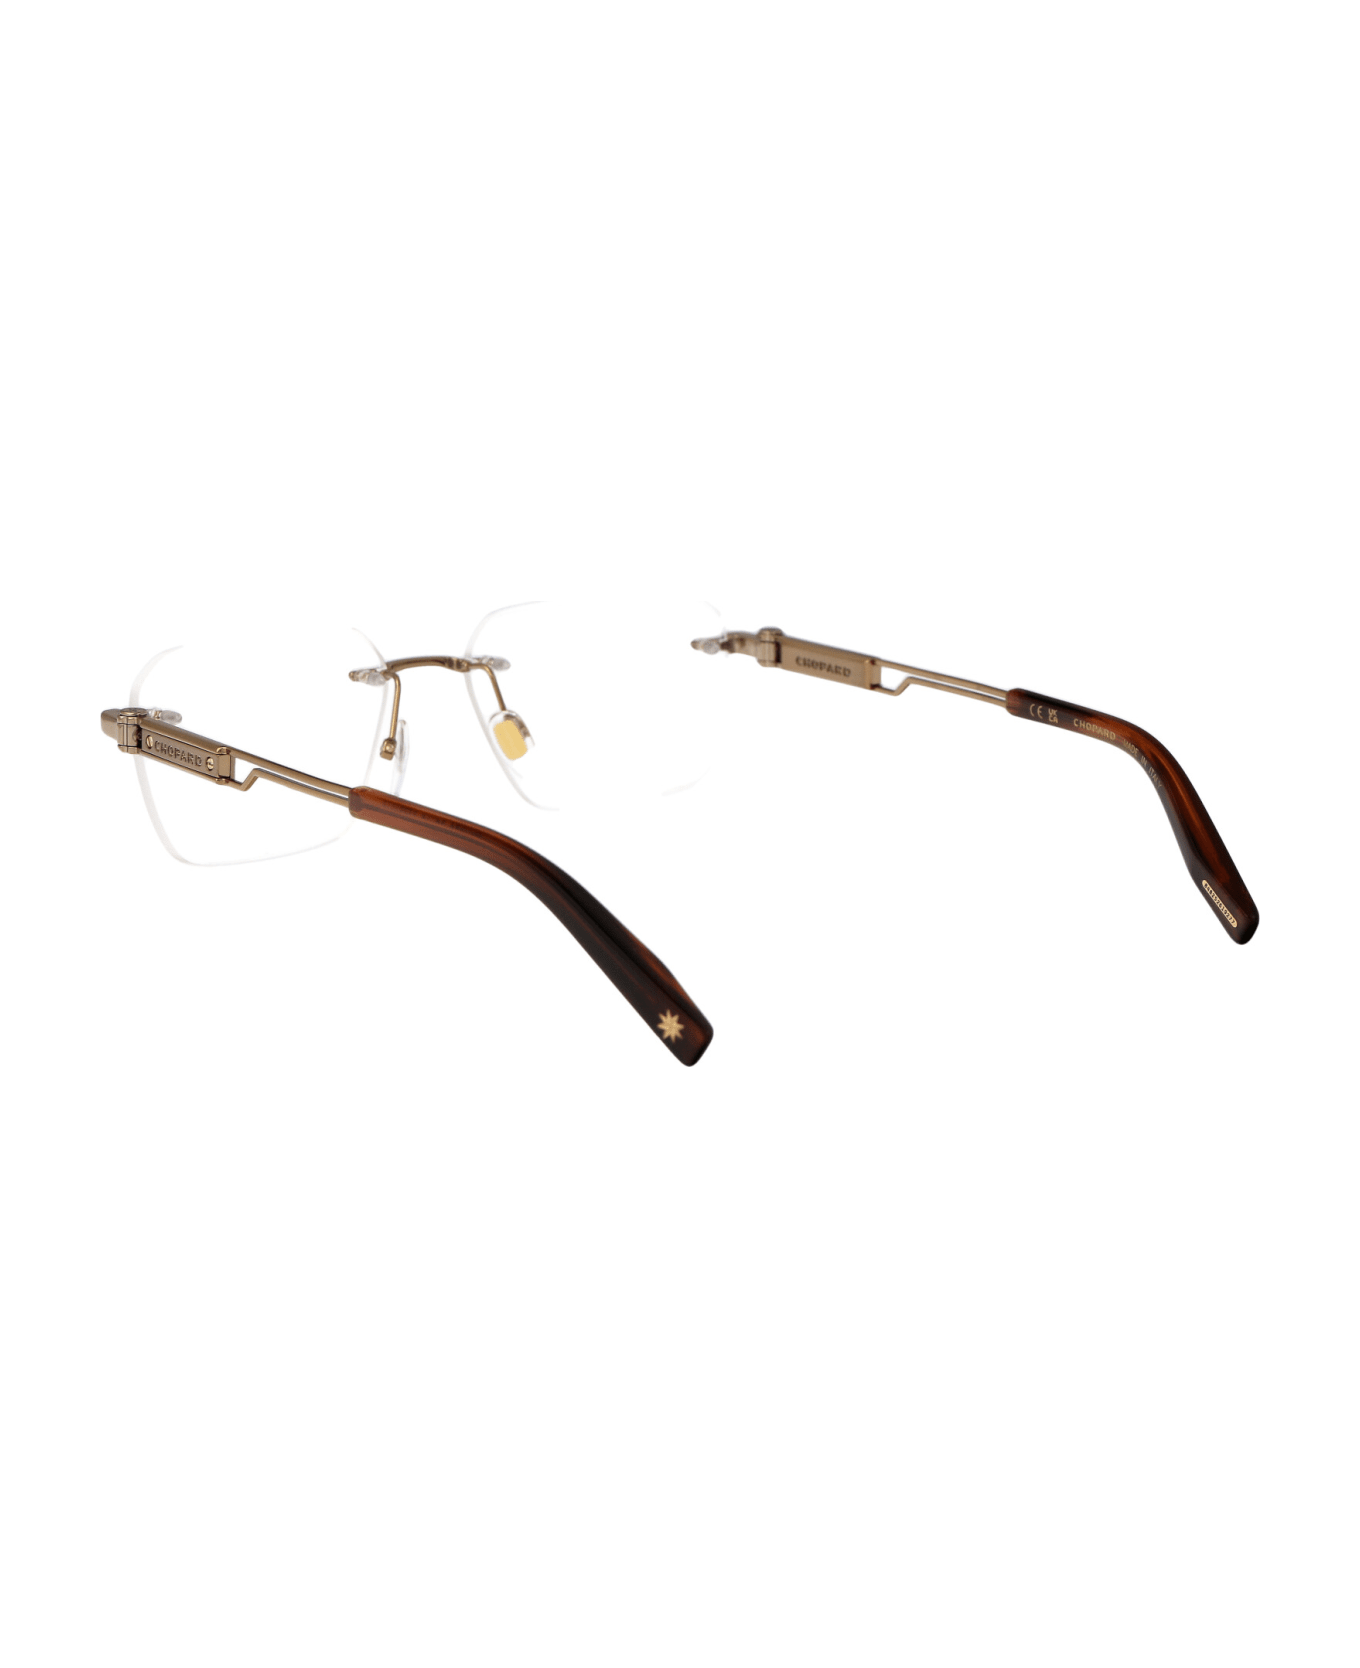 Chopard Vchg87 Glasses - 08FF ORO GRIGIO LUCIDO アイウェア